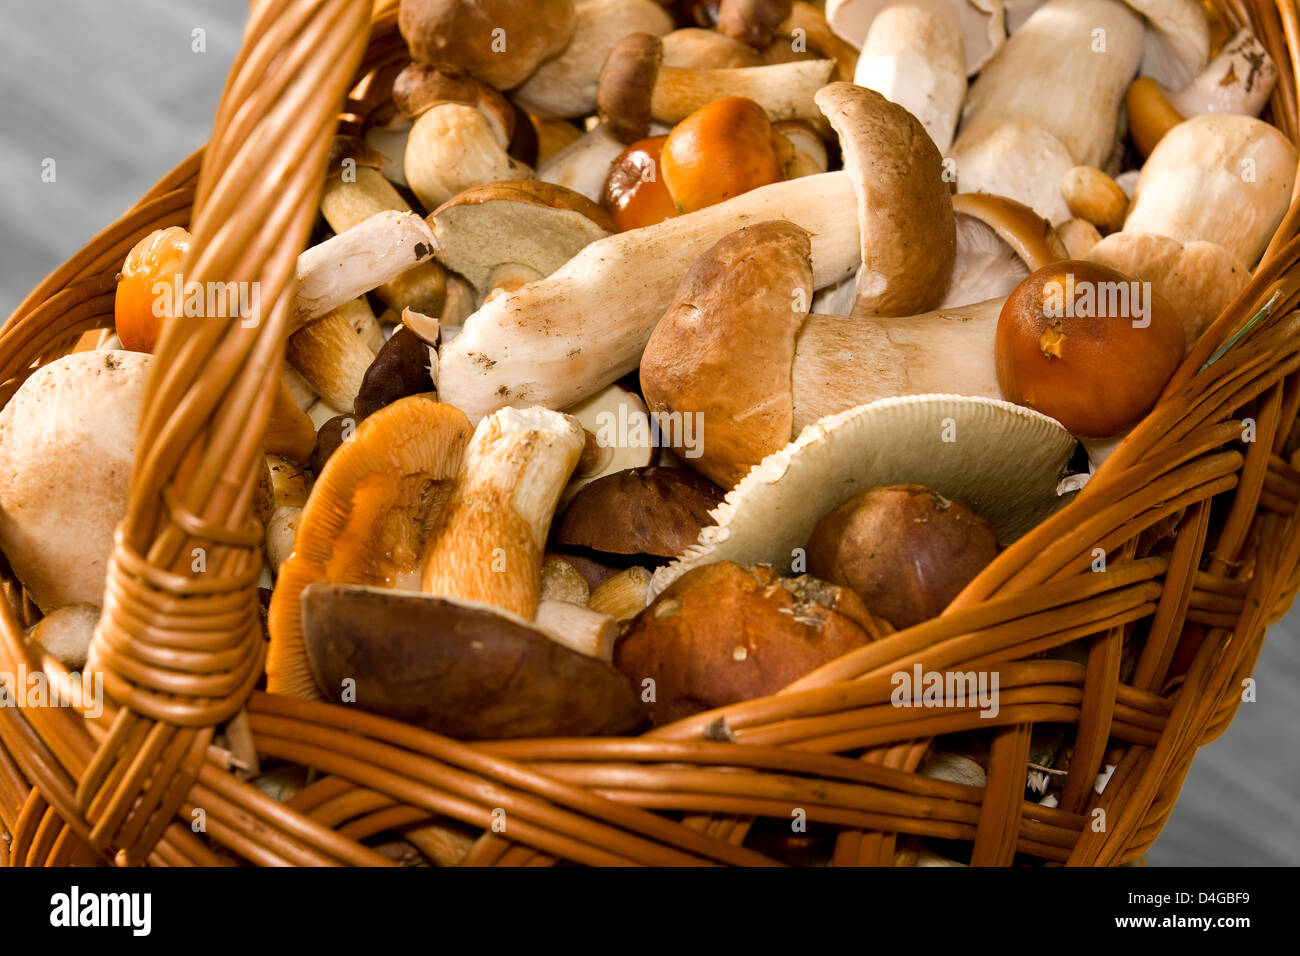 Basket with edible mushrooms. Fungus. Stock Photo